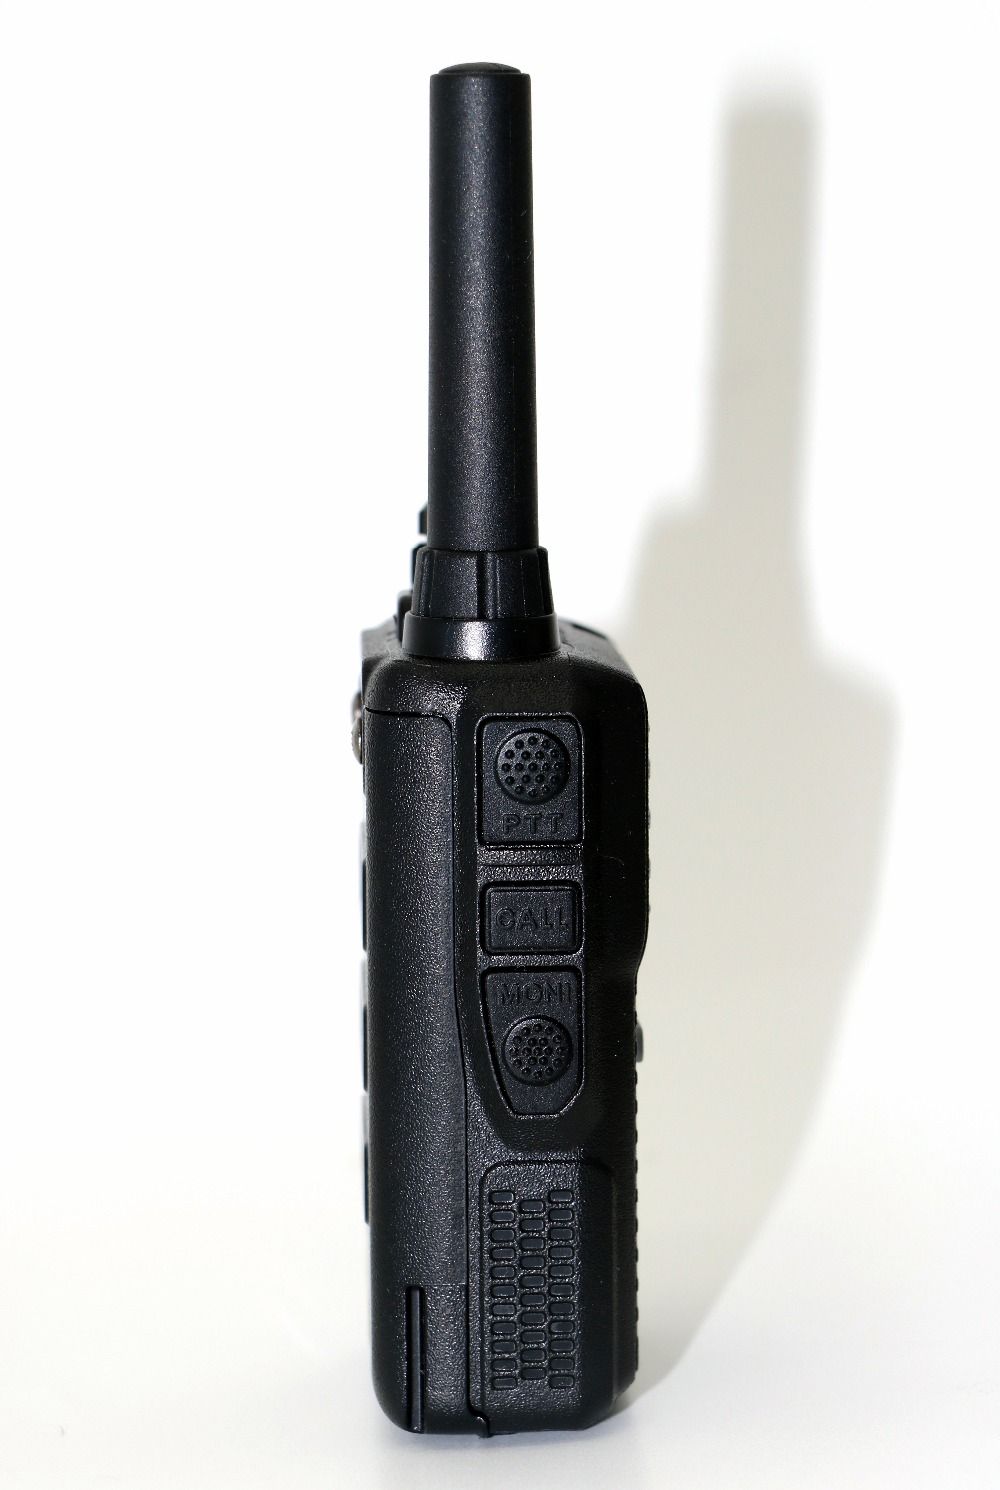 Baofeng-BF-E90-Walkie-Talkie-With-Headset-5W-Power-400-470Mhz-Frequency-UHF-Handheld-Radio-Intercom--1358252